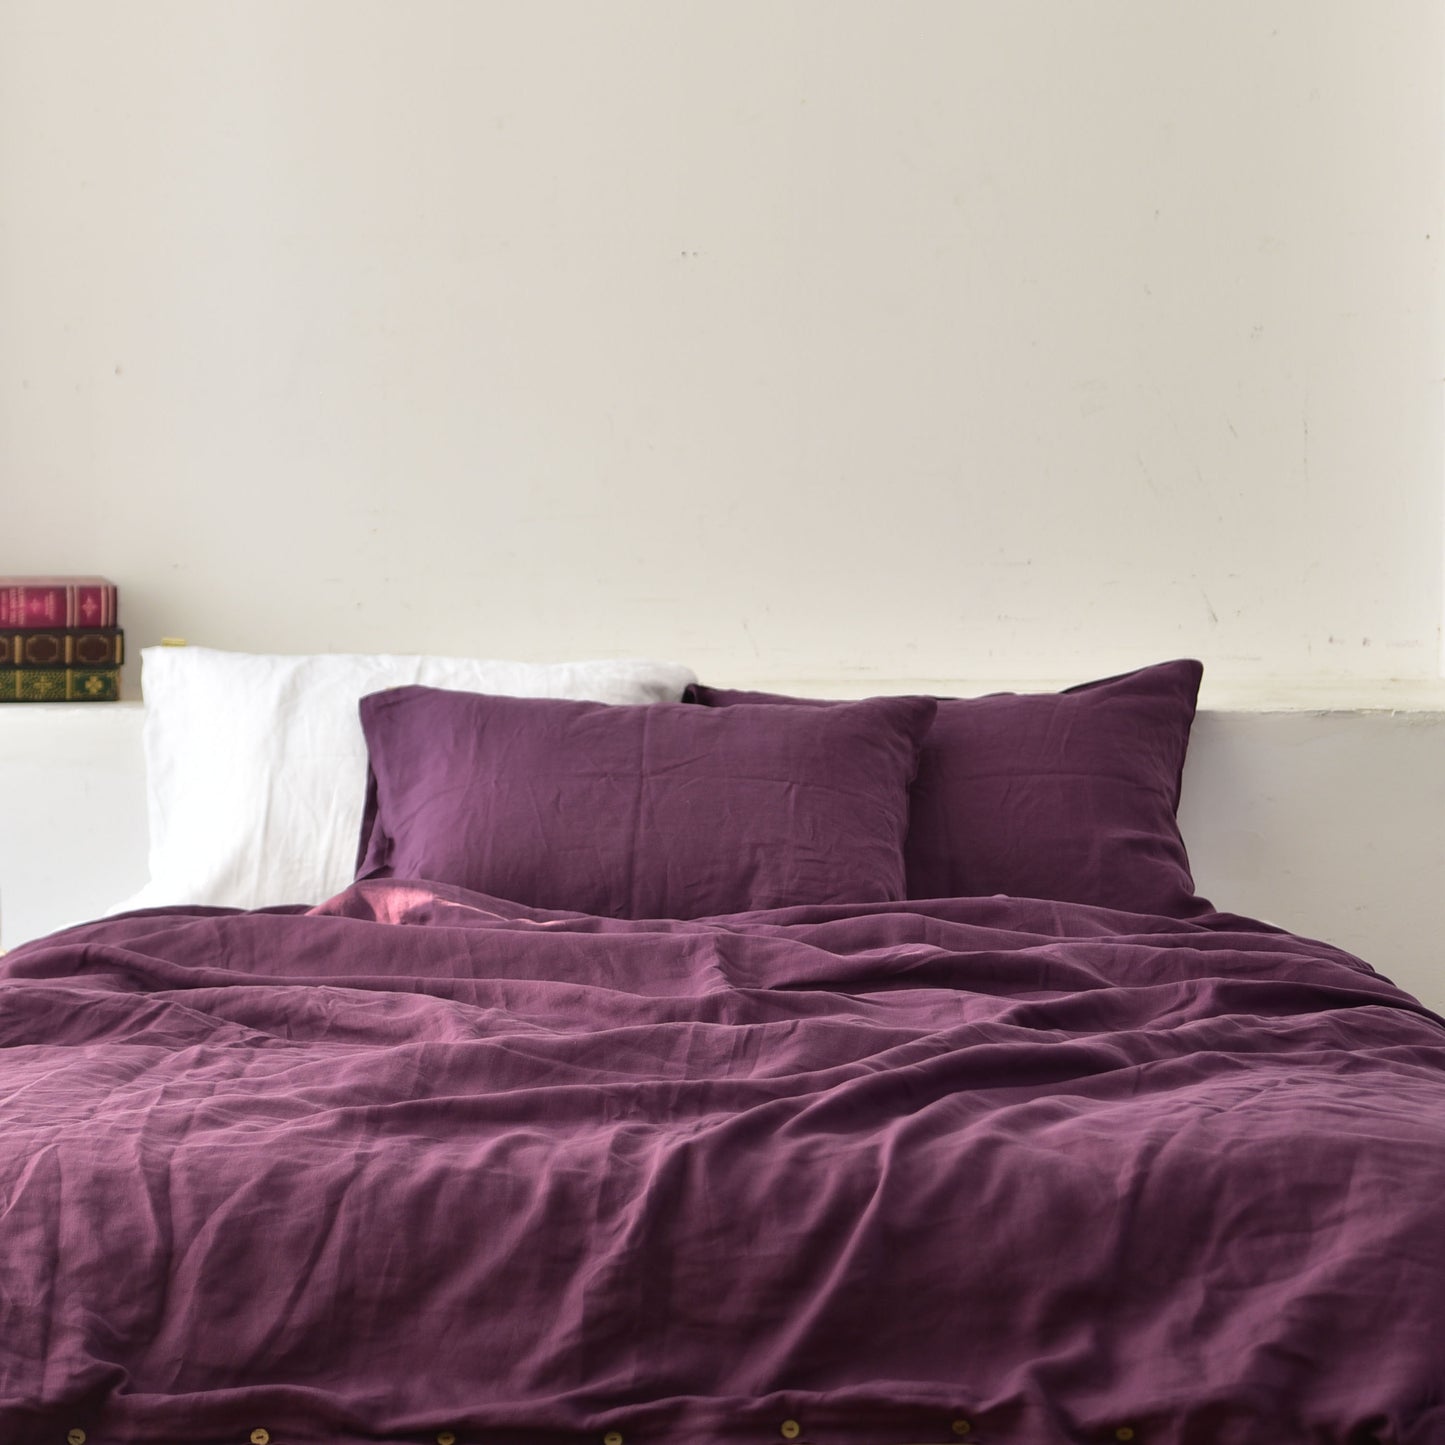 Violet French Linen Bedding Sets (4 pieces) - Plain Dyeing